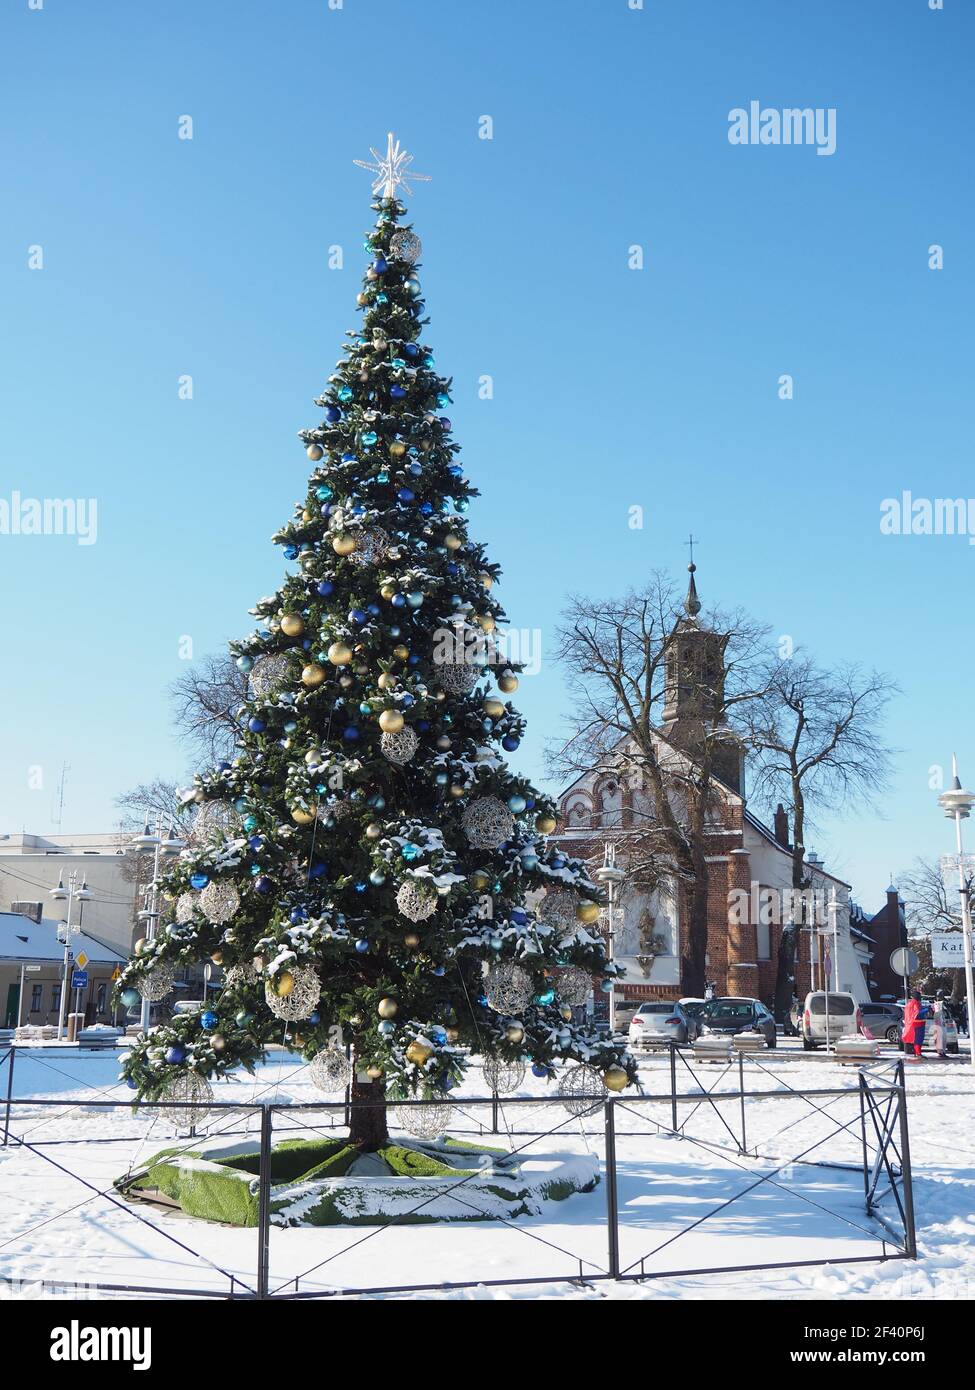 Christmas tree in town square Piaseczno, Poland Stock Photo